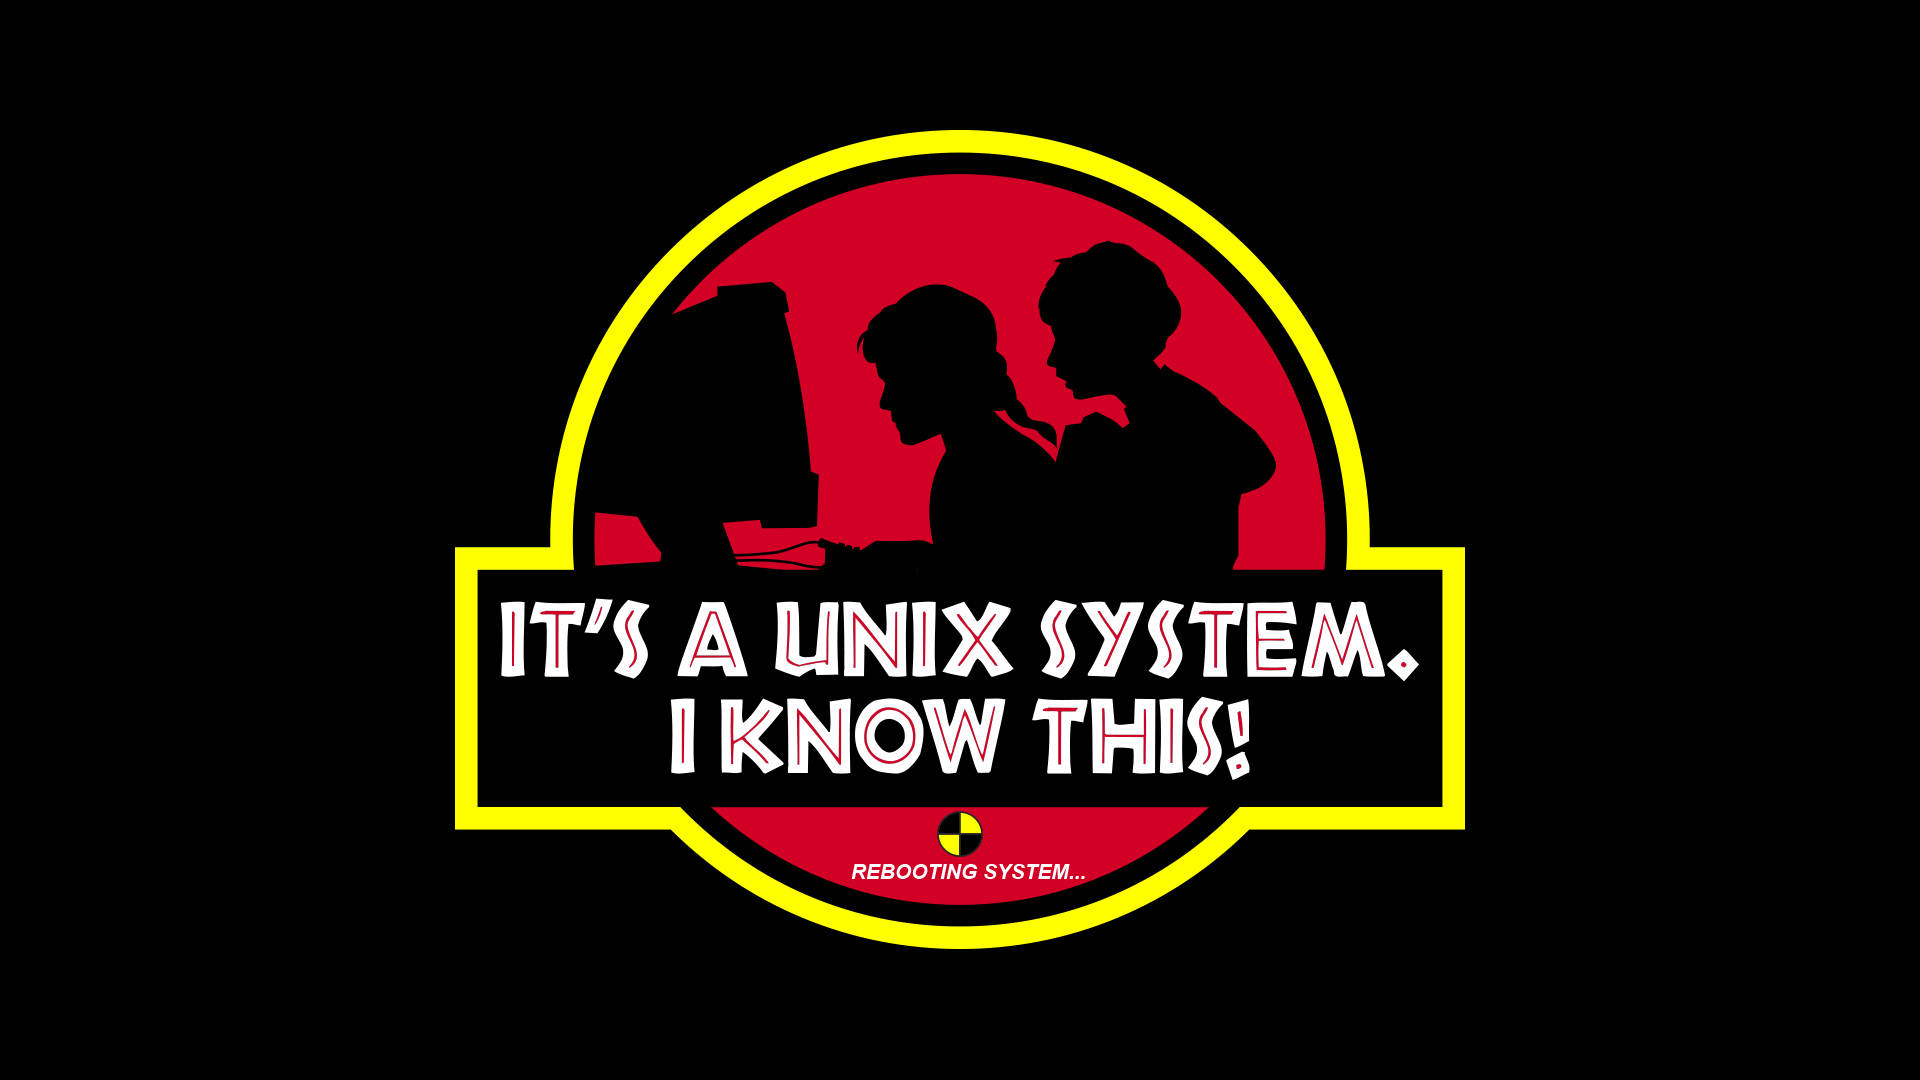 Unix Jurassic Park-inspired Logo Wallpaper